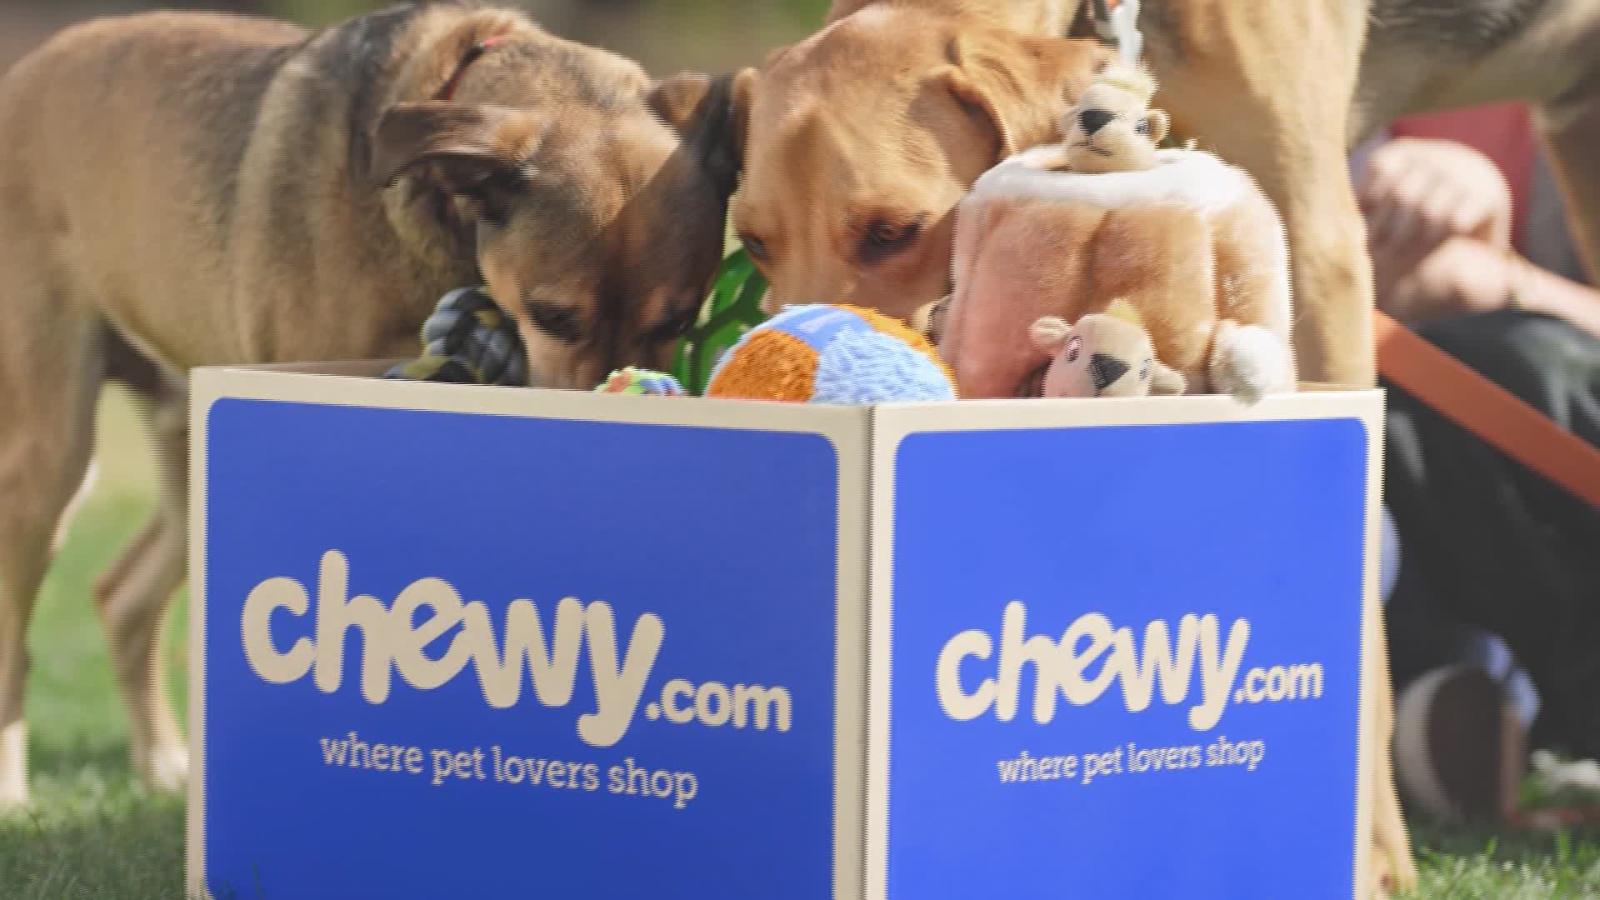 Chewy CEO: We're serving pet parents 